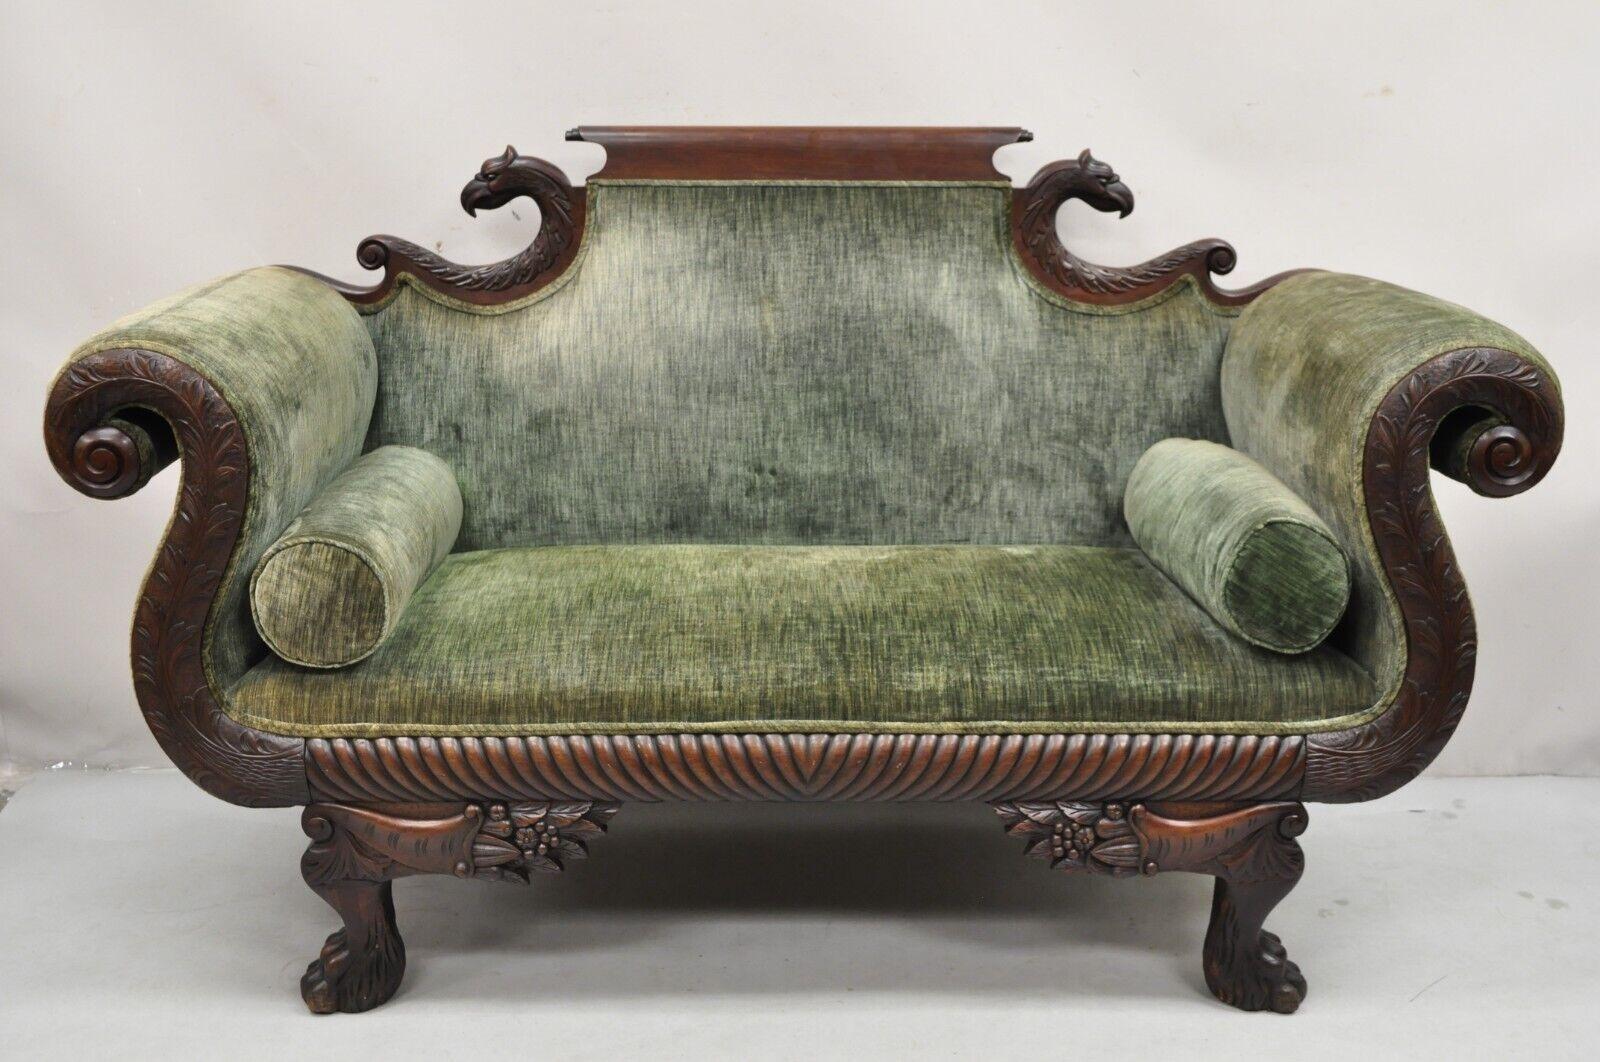 Antique American Empire Carved Mahogany Eagle Cornucopia Settee Loveseat Sofa. Circa 19th Century. Measurements: 40.5